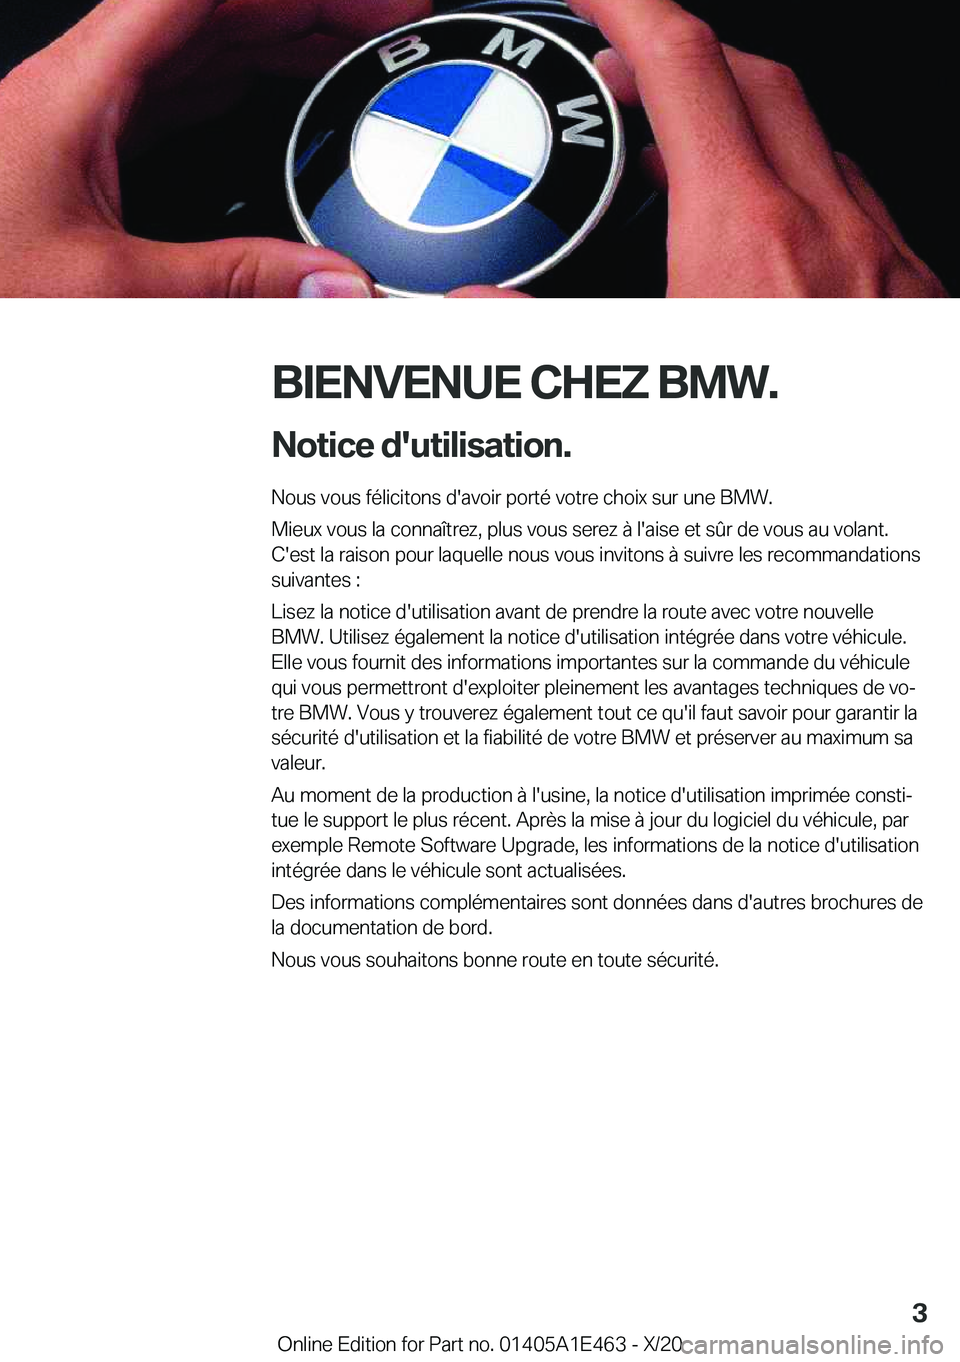 BMW M3 2021  Notices Demploi (in French) �B�I�E�N�V�E�N�U�E��C�H�E�Z��B�M�W�.�N�o�t�i�c�e��d�'�u�t�i�l�i�s�a�t�i�o�n�.
�N�o�u�s��v�o�u�s��f�é�l�i�c�i�t�o�n�s��d�'�a�v�o�i�r��p�o�r�t�é��v�o�t�r�e��c�h�o�i�x��s�u�r��u�n�e�